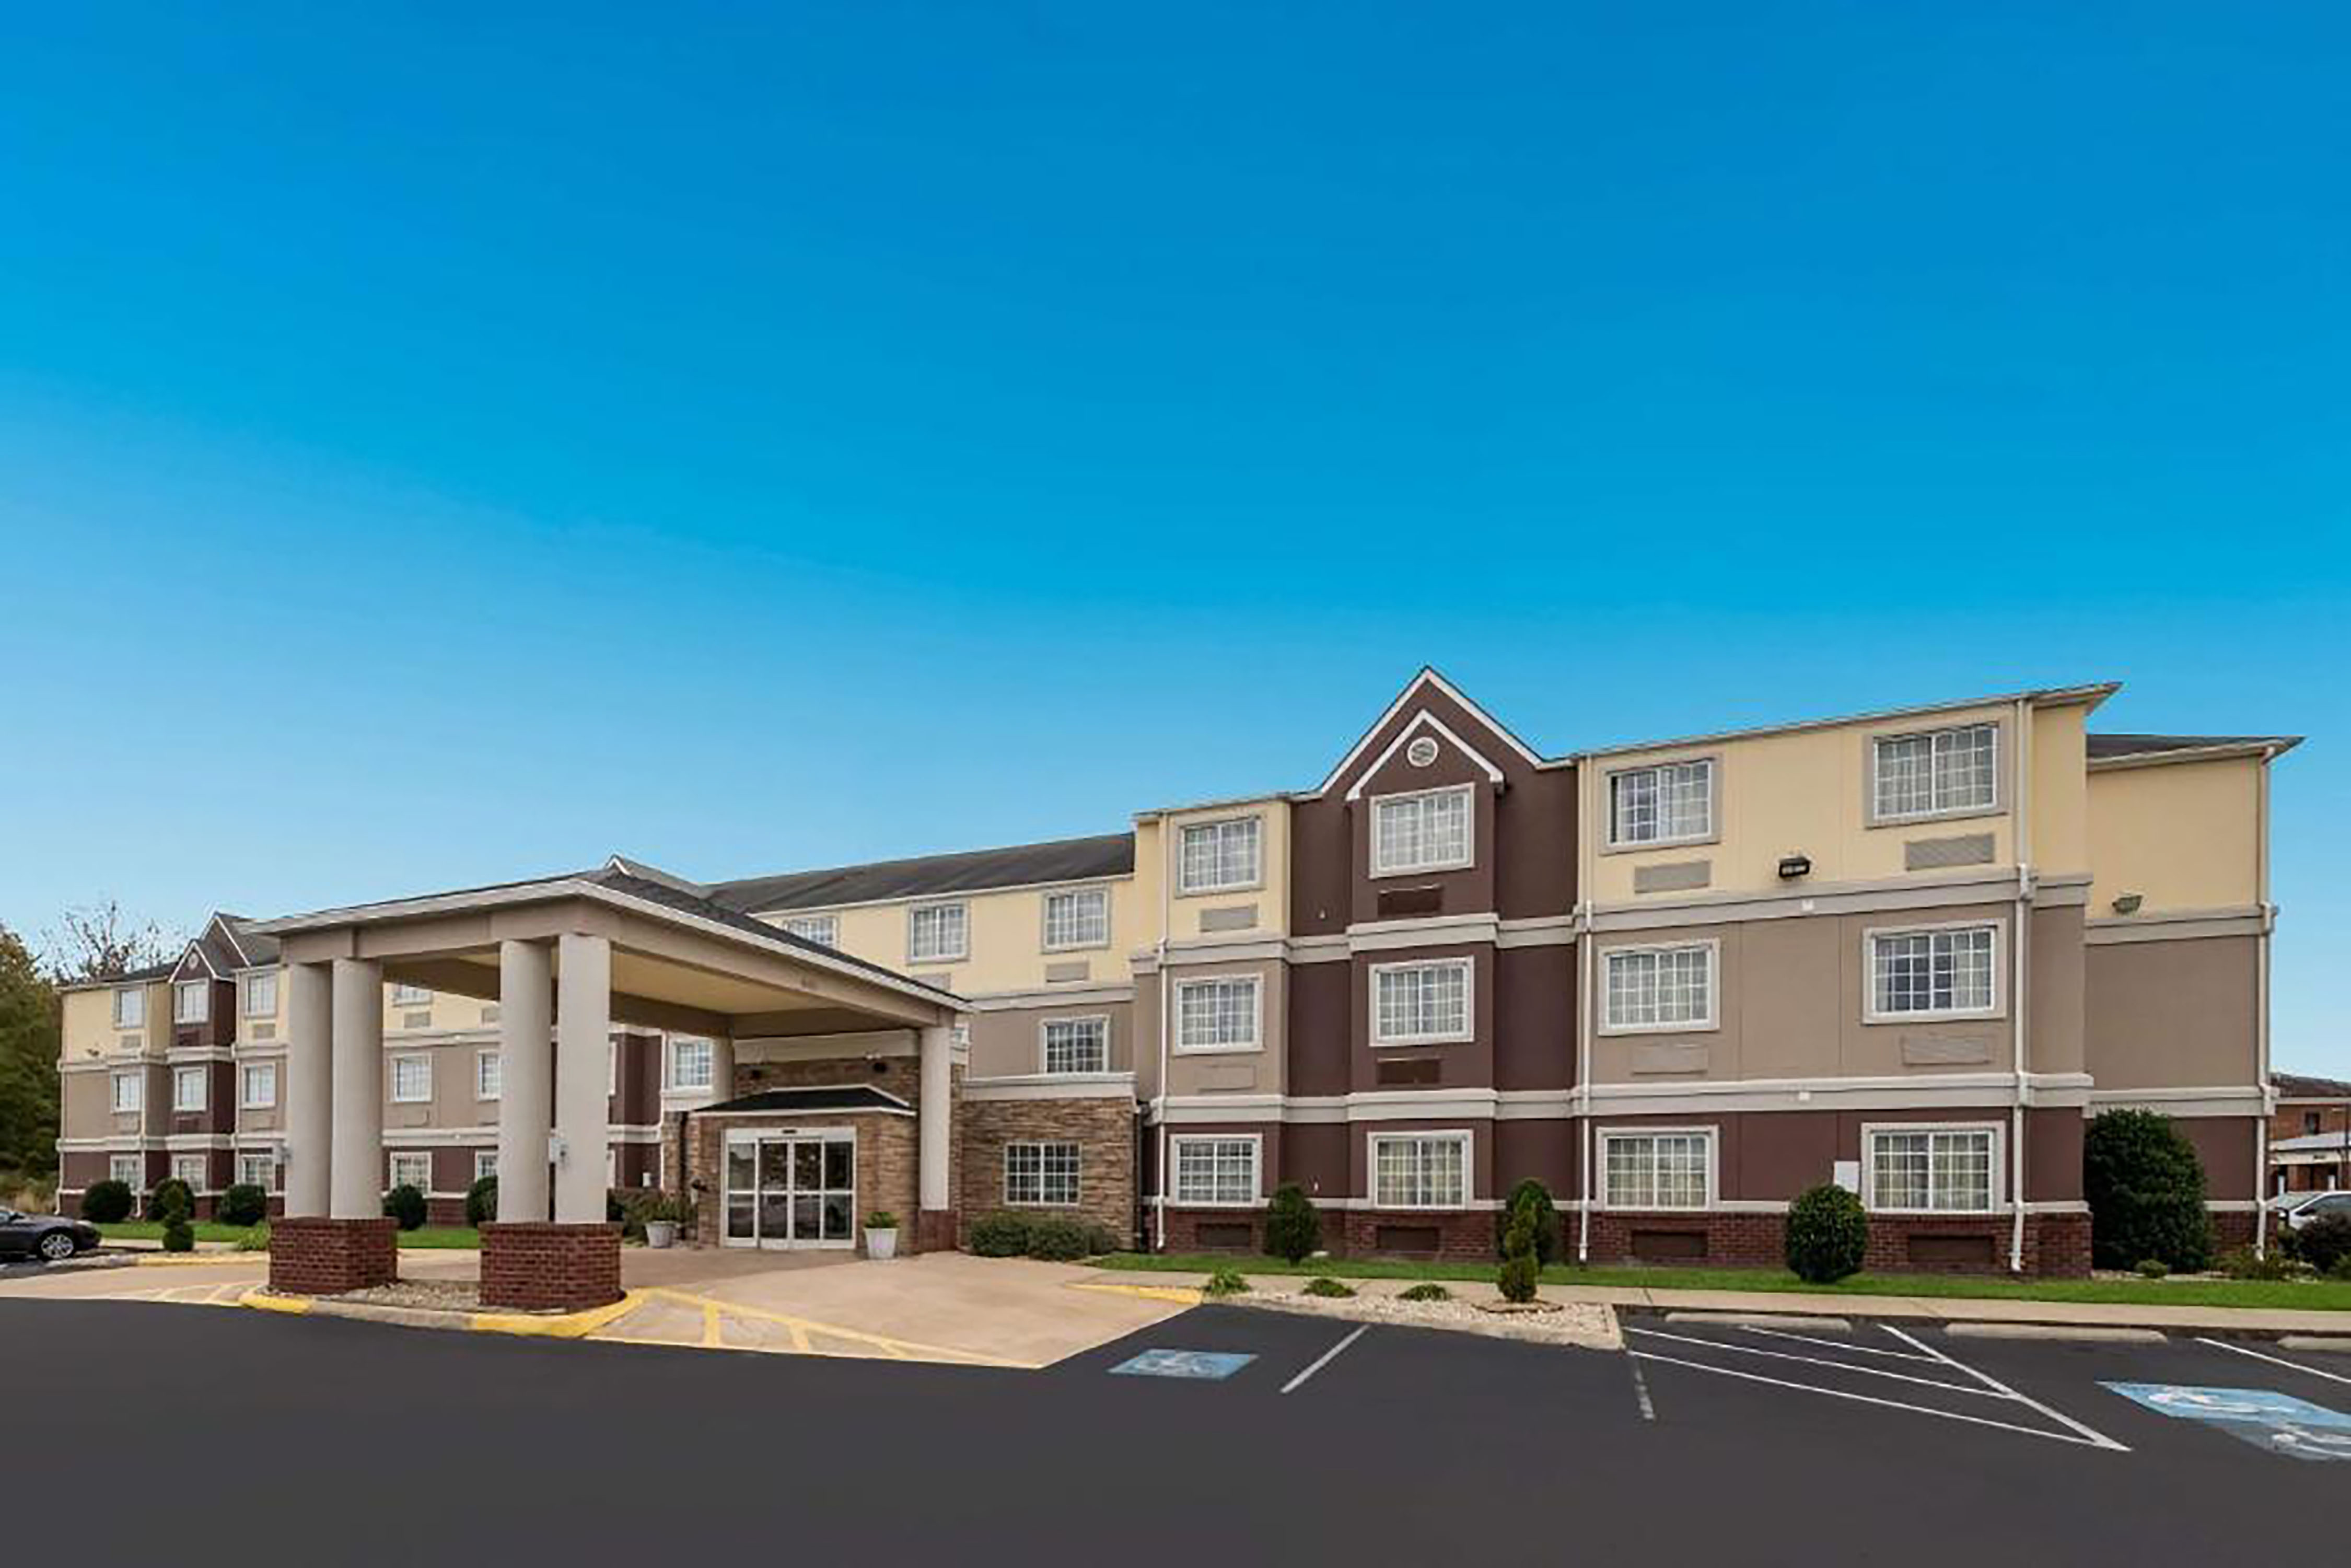 Exterior Day Image of Baymont by Wyndham Elizabeth City hotel in Elizabeth City, North Carolina